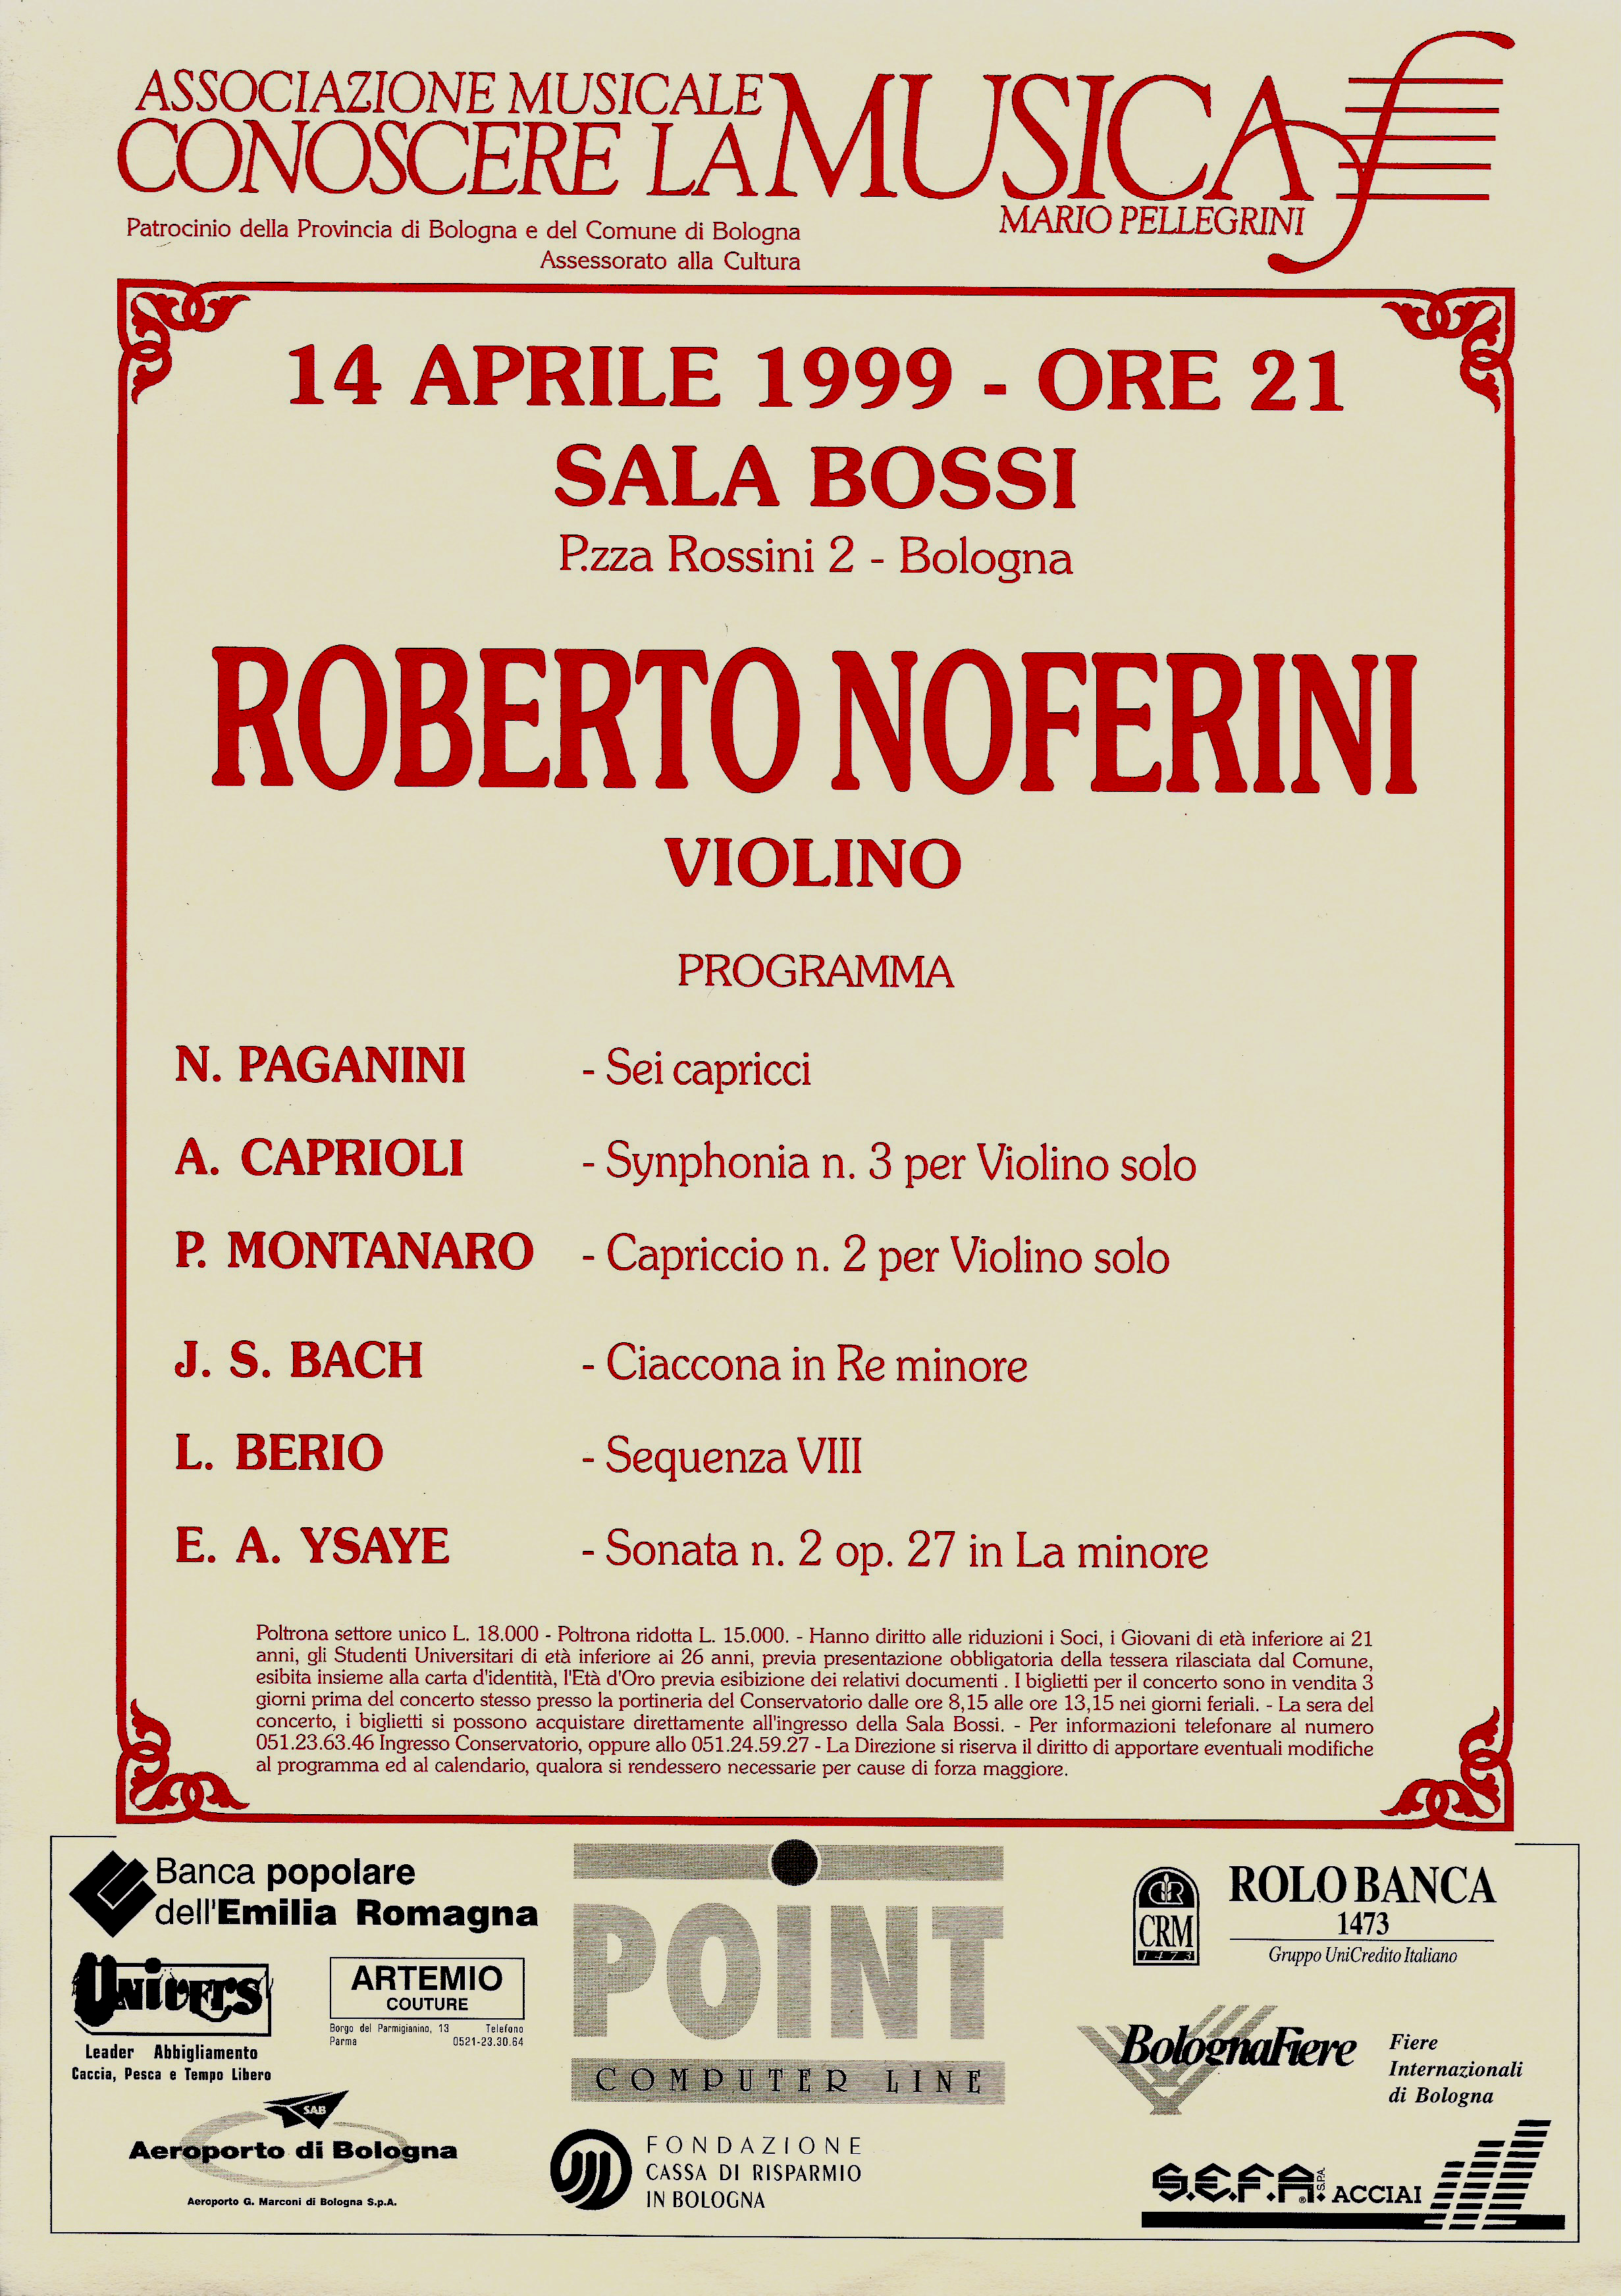 ROBERTO NOFERINI plays Alberto Caprioli, Symphonia III